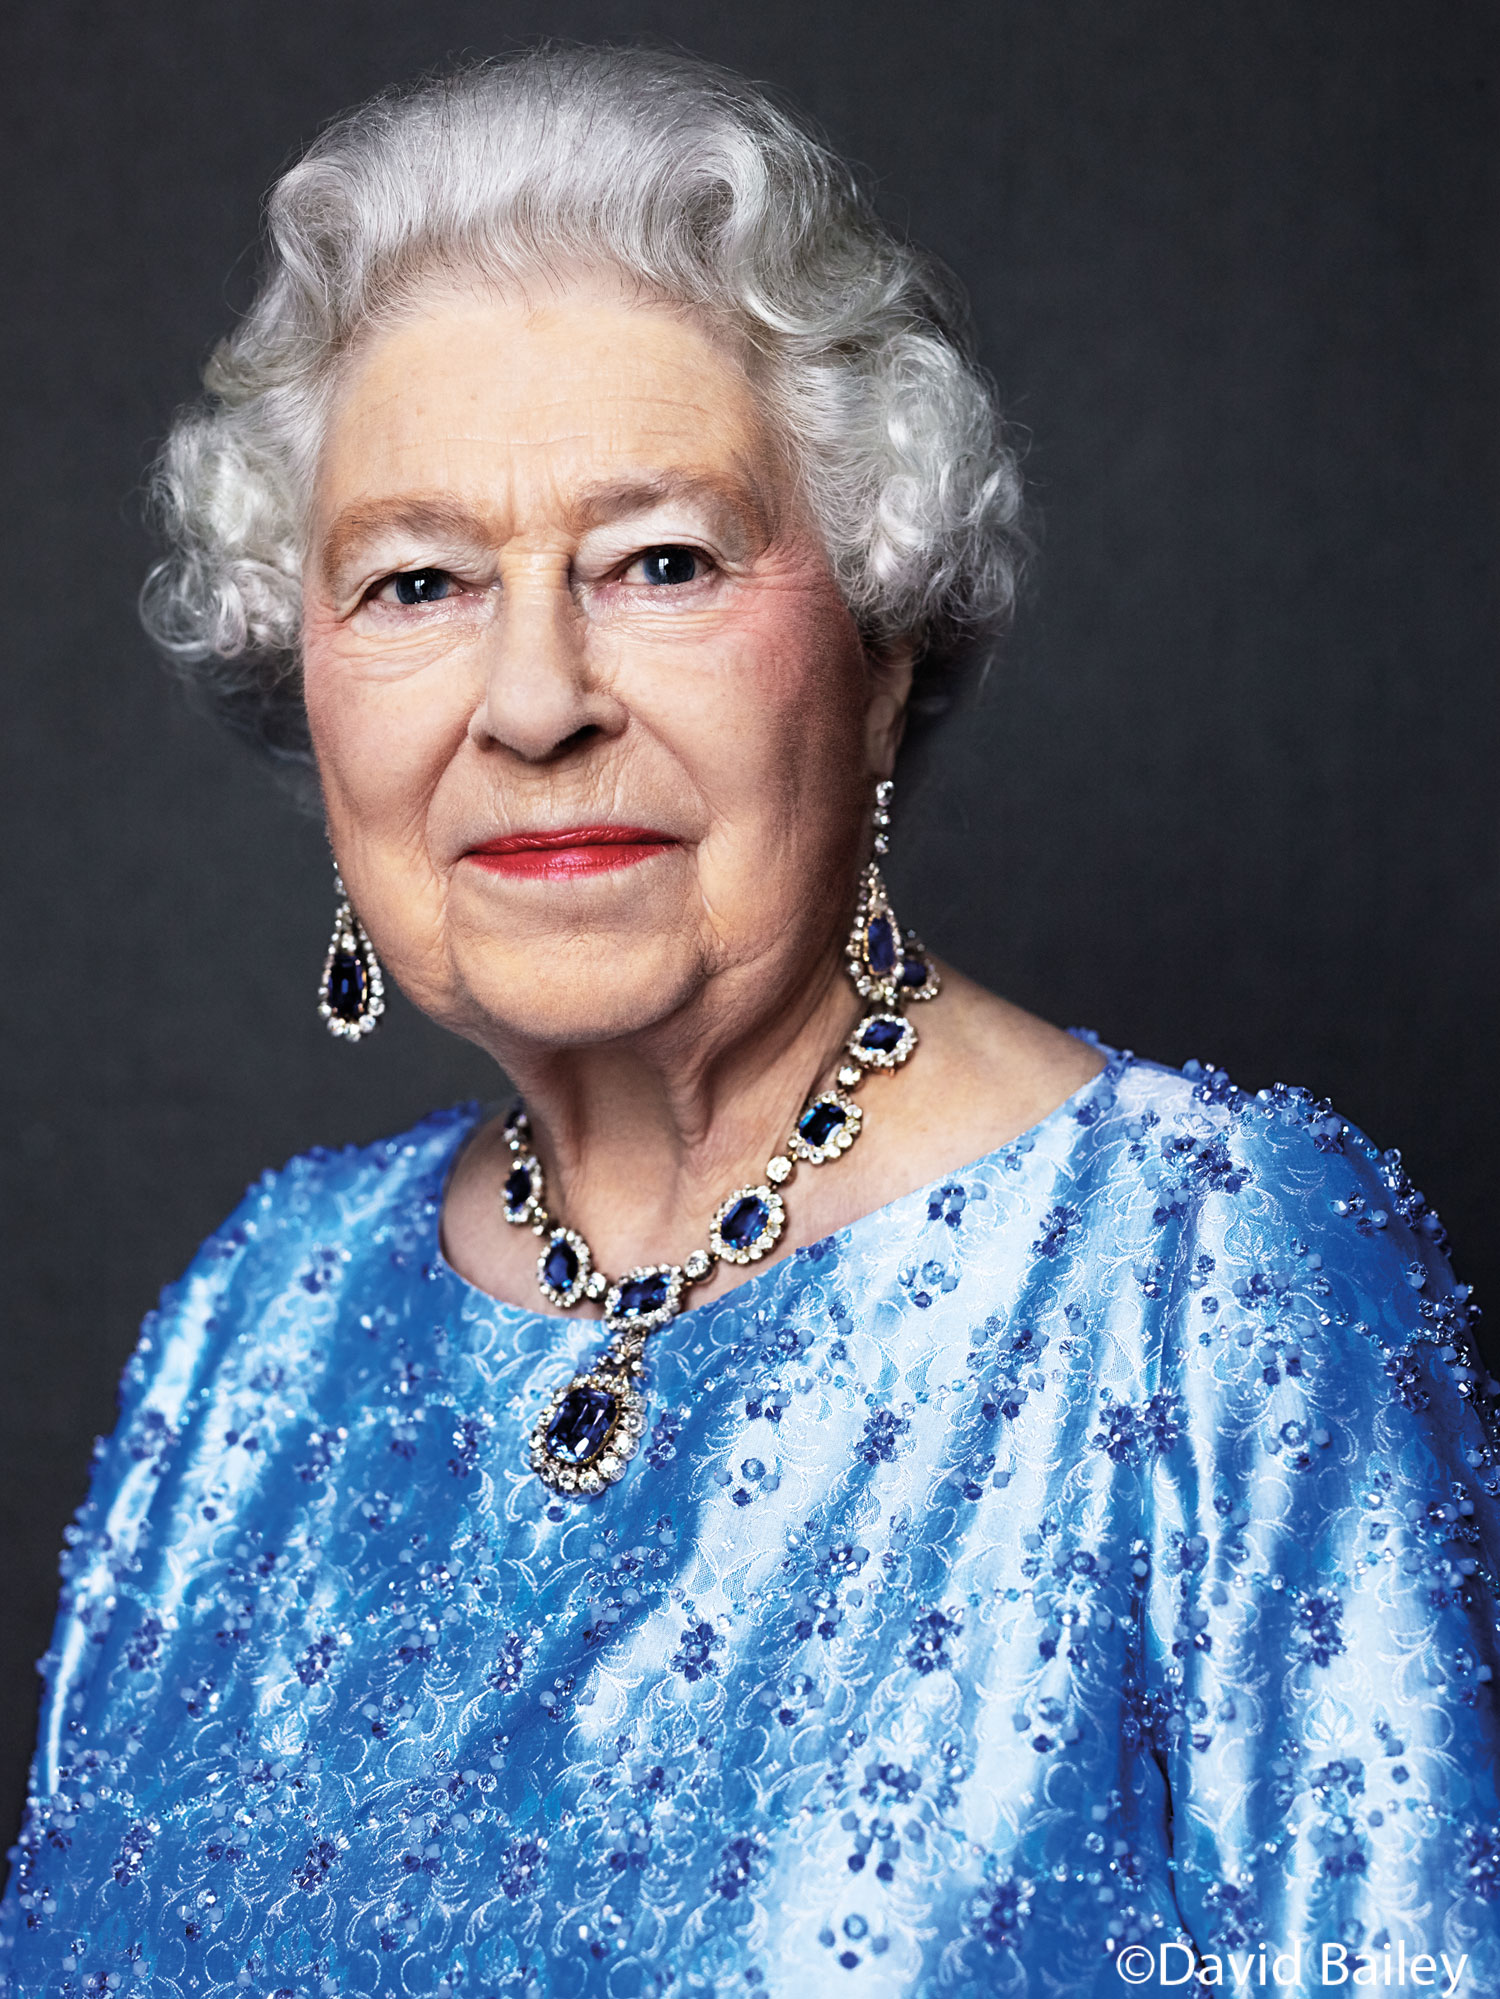 The queen photo